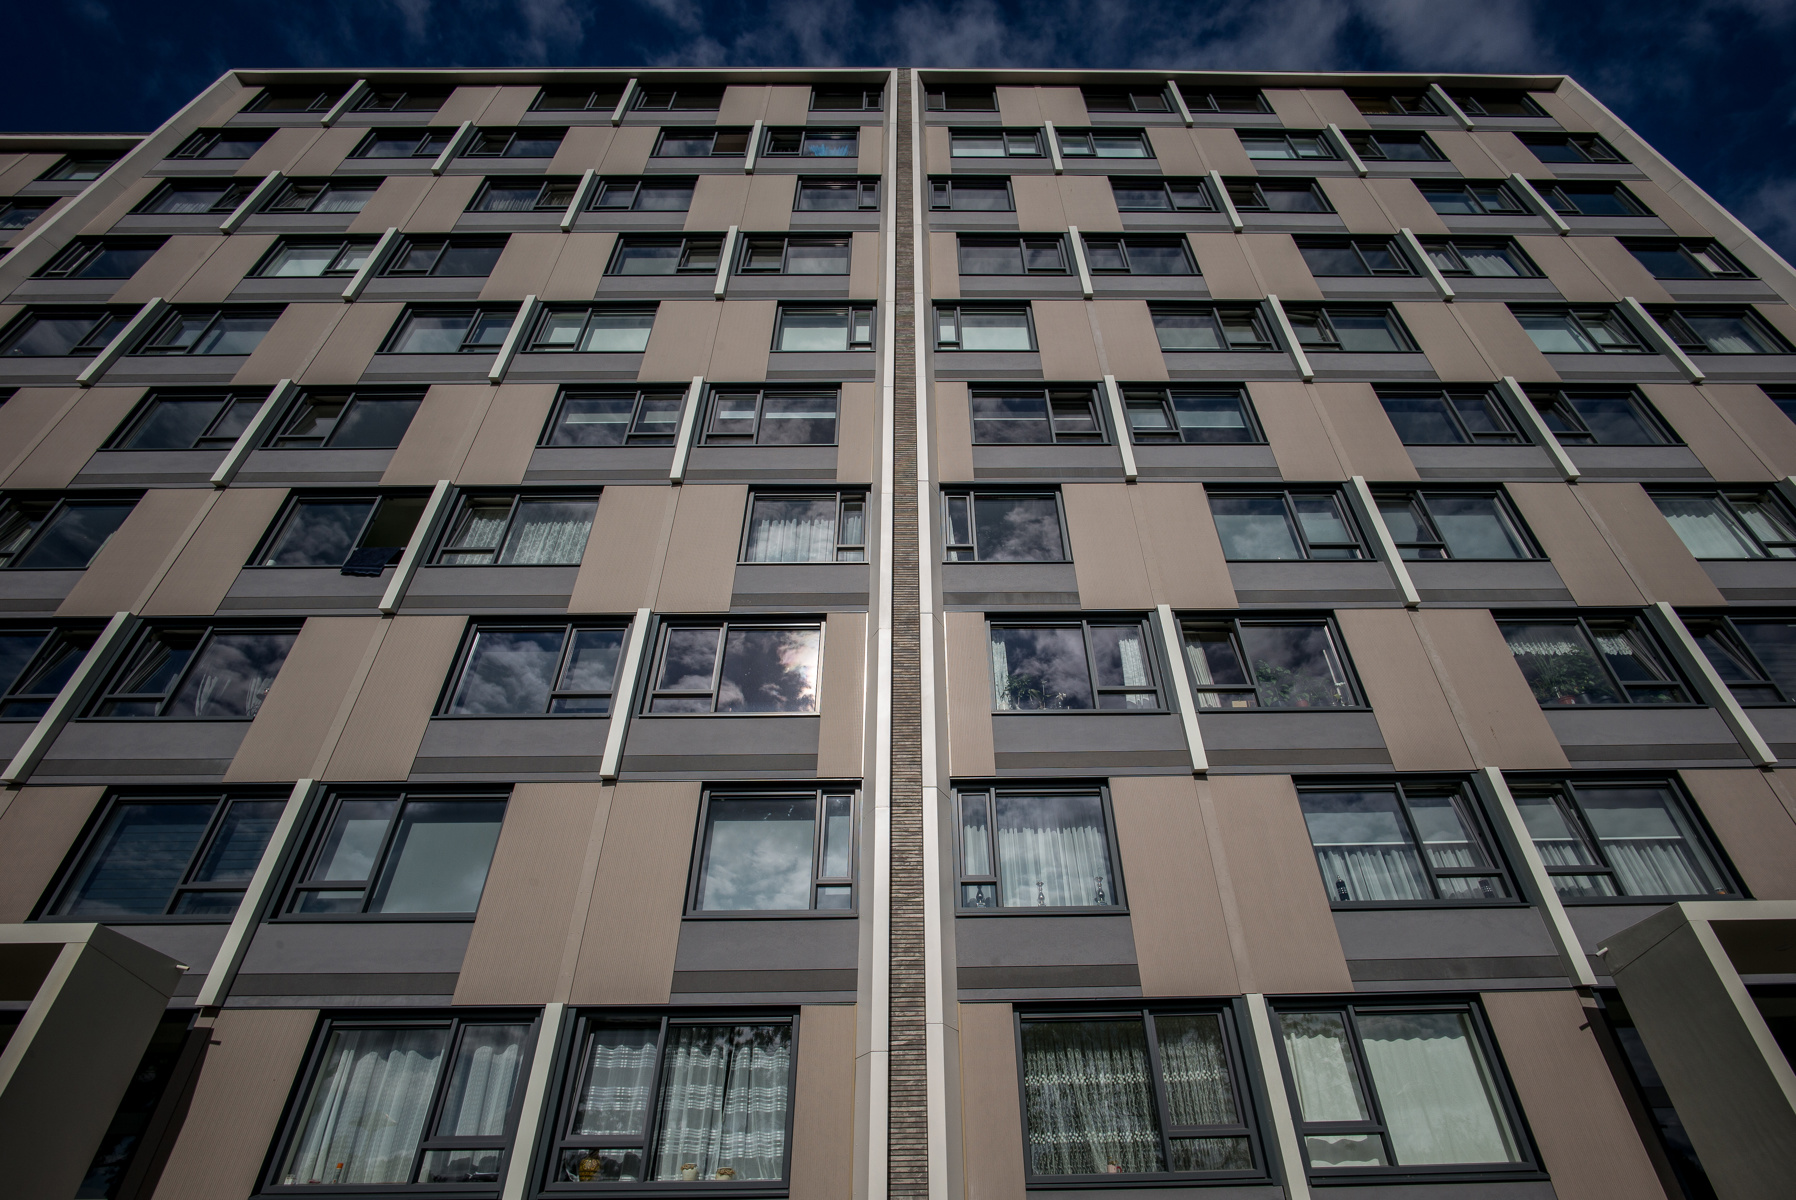 Projet à l'honneur: ACA-flats à Utrecht-Overvecht